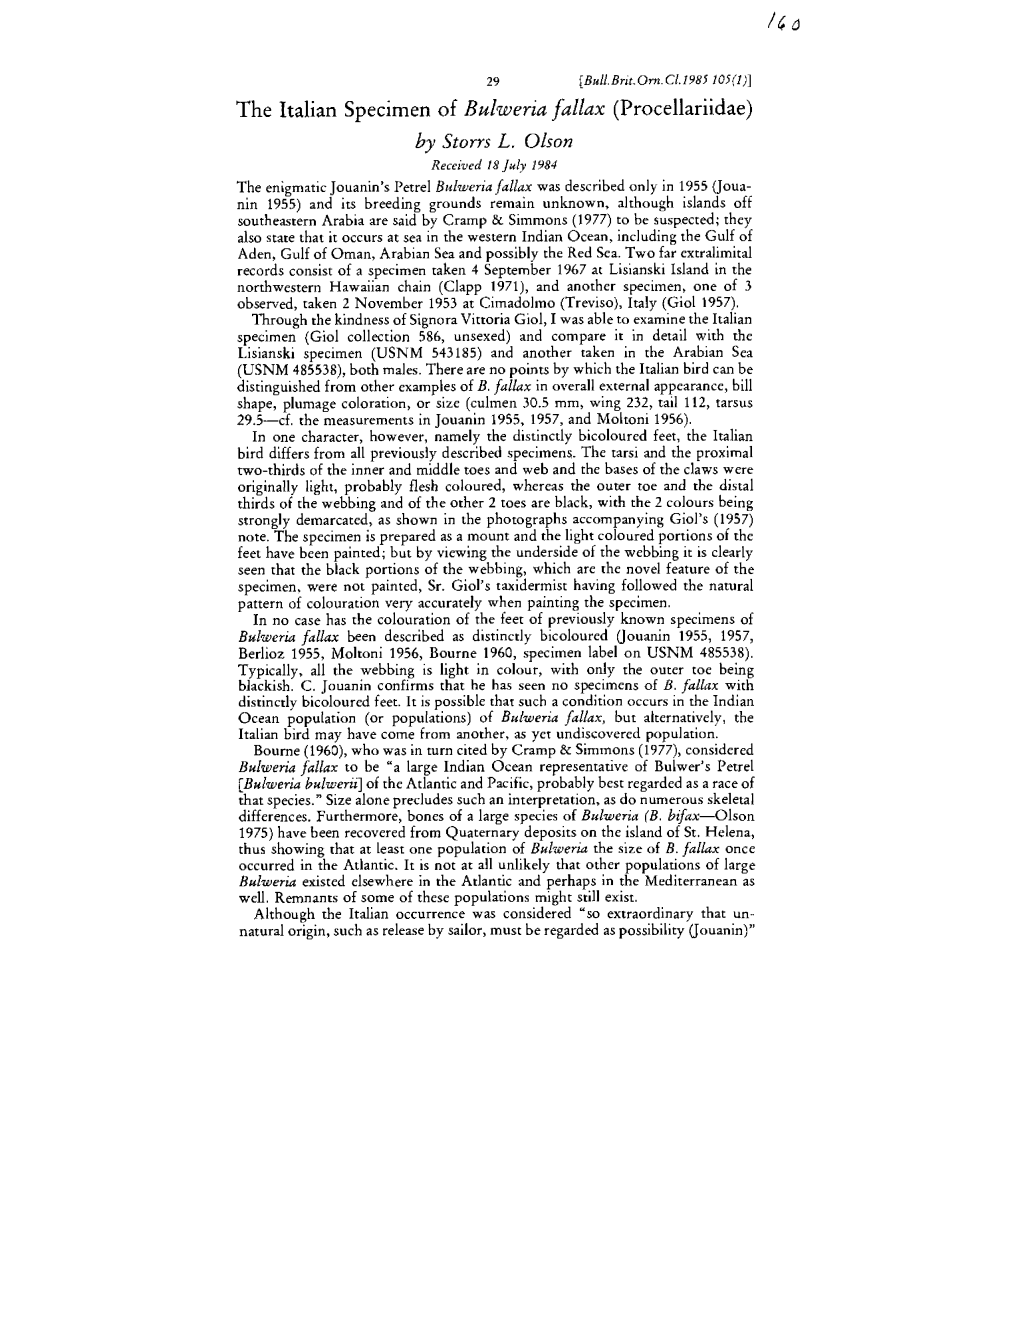 4 a the Italian Specimen of Bulweria Fallax (Procellariidae) by Storrs L. Olson